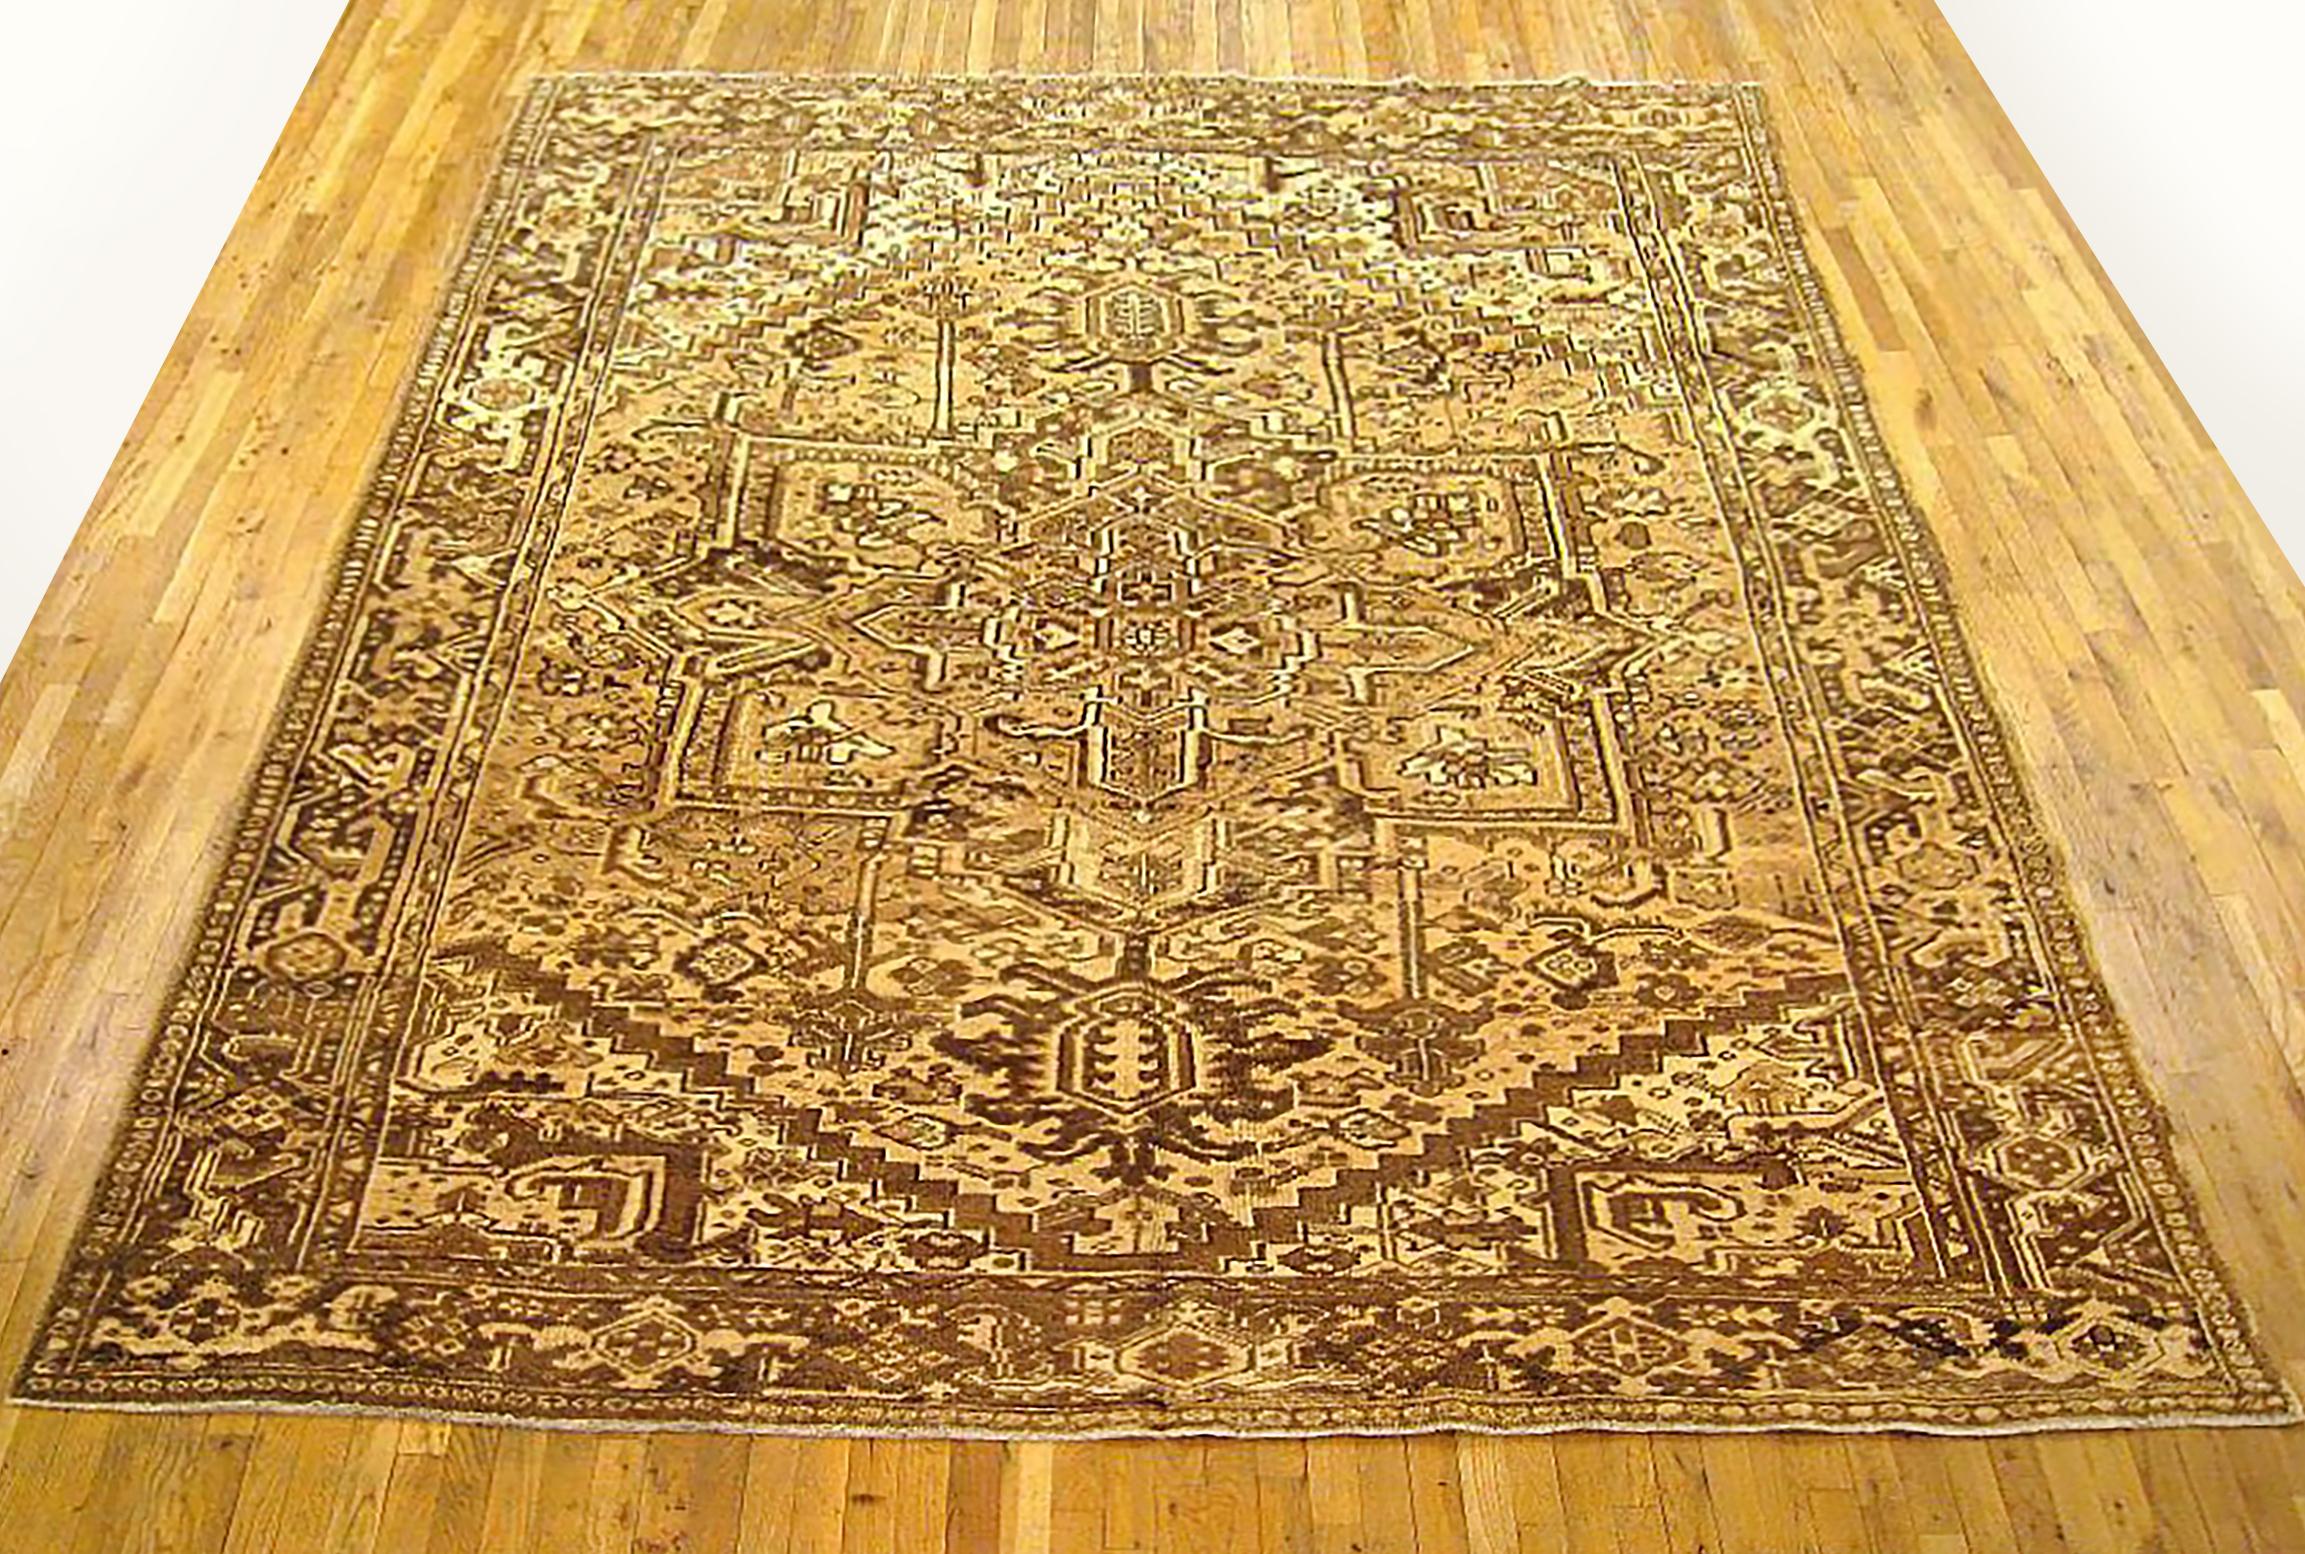 Vintage Persian Heriz Oriental rug, Room size

A vintage Persian Heriz oriental rug, size 11'2